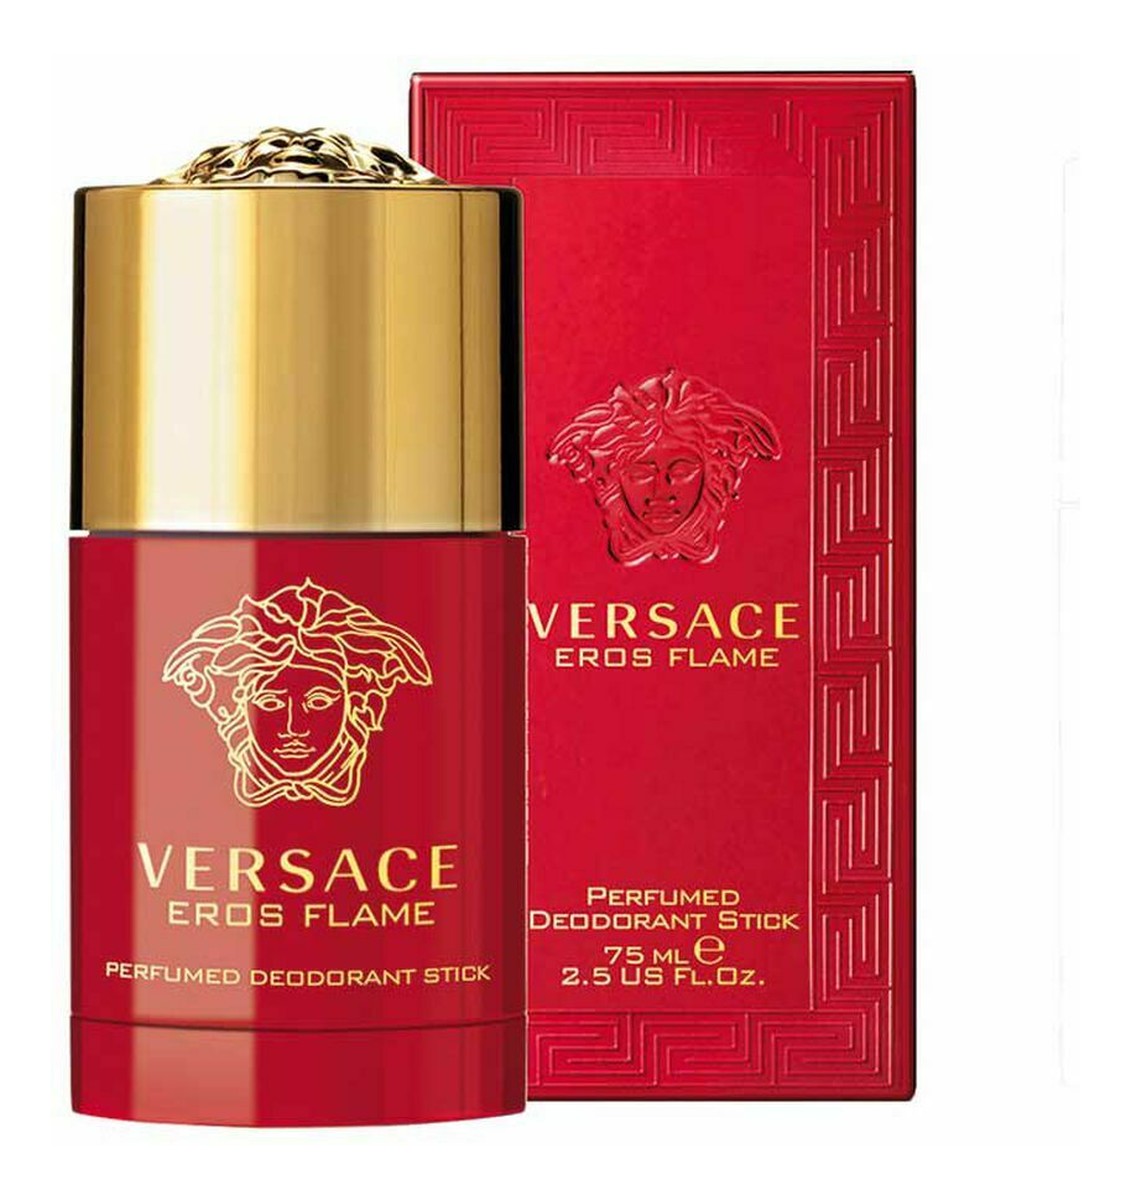 Versace Eros Flame Dezodorant sztyft